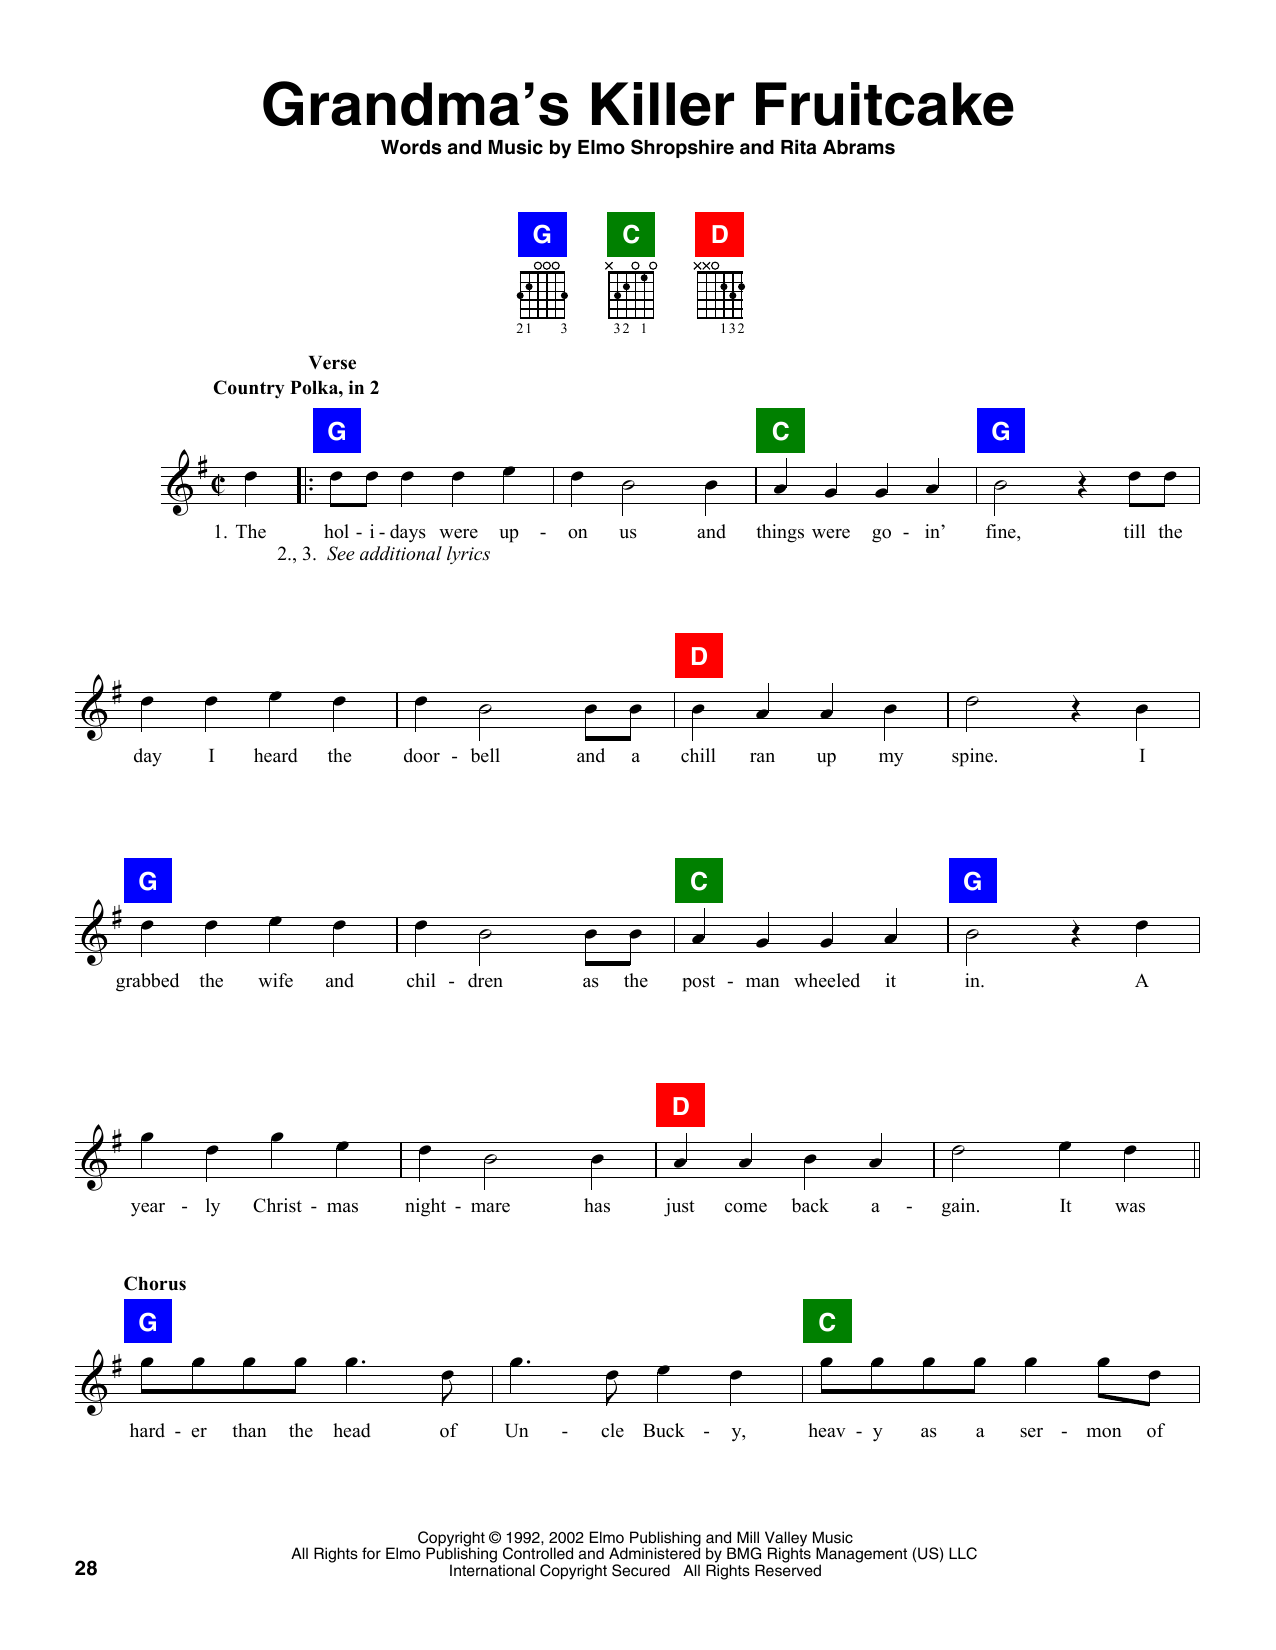 Download Elmo Shropshire Grandma's Killer Fruitcake Sheet Music and learn how to play Tenor Saxophone PDF digital score in minutes